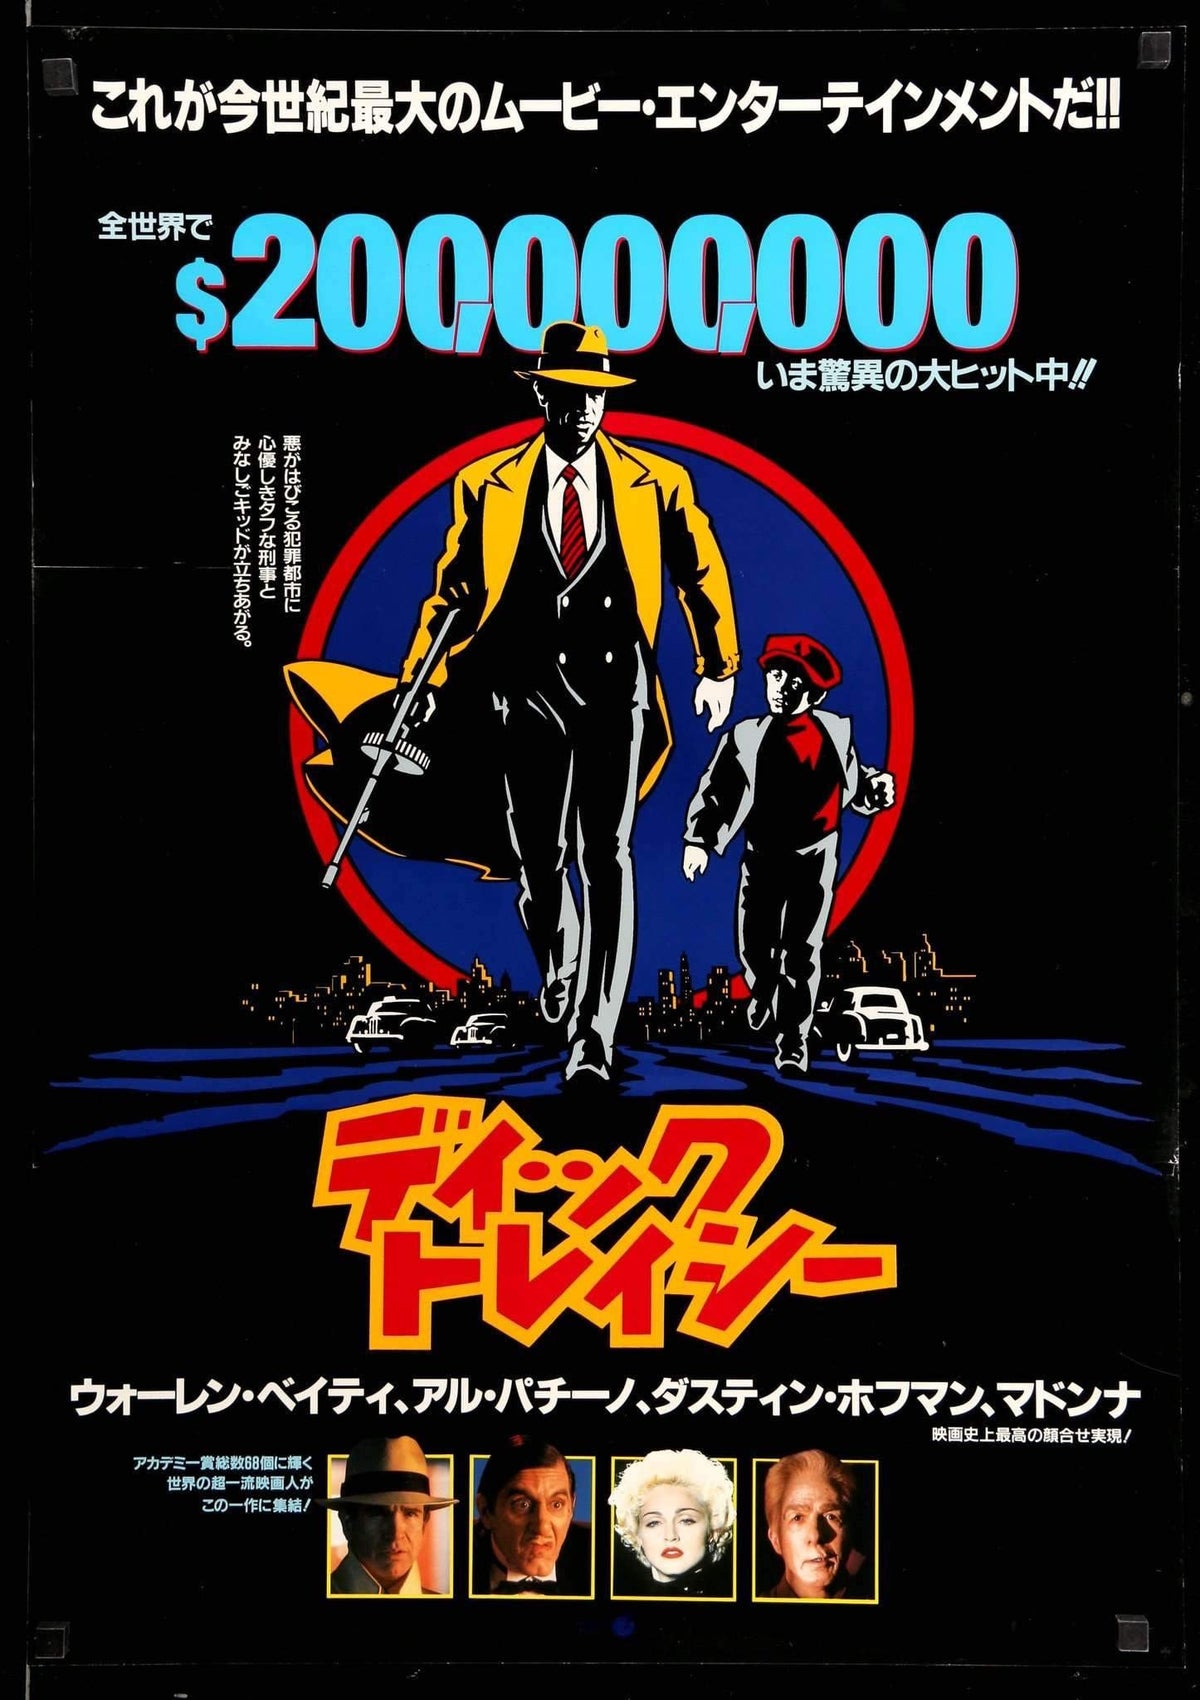 Dick Tracy (1990) original movie poster for sale at Original Film Art